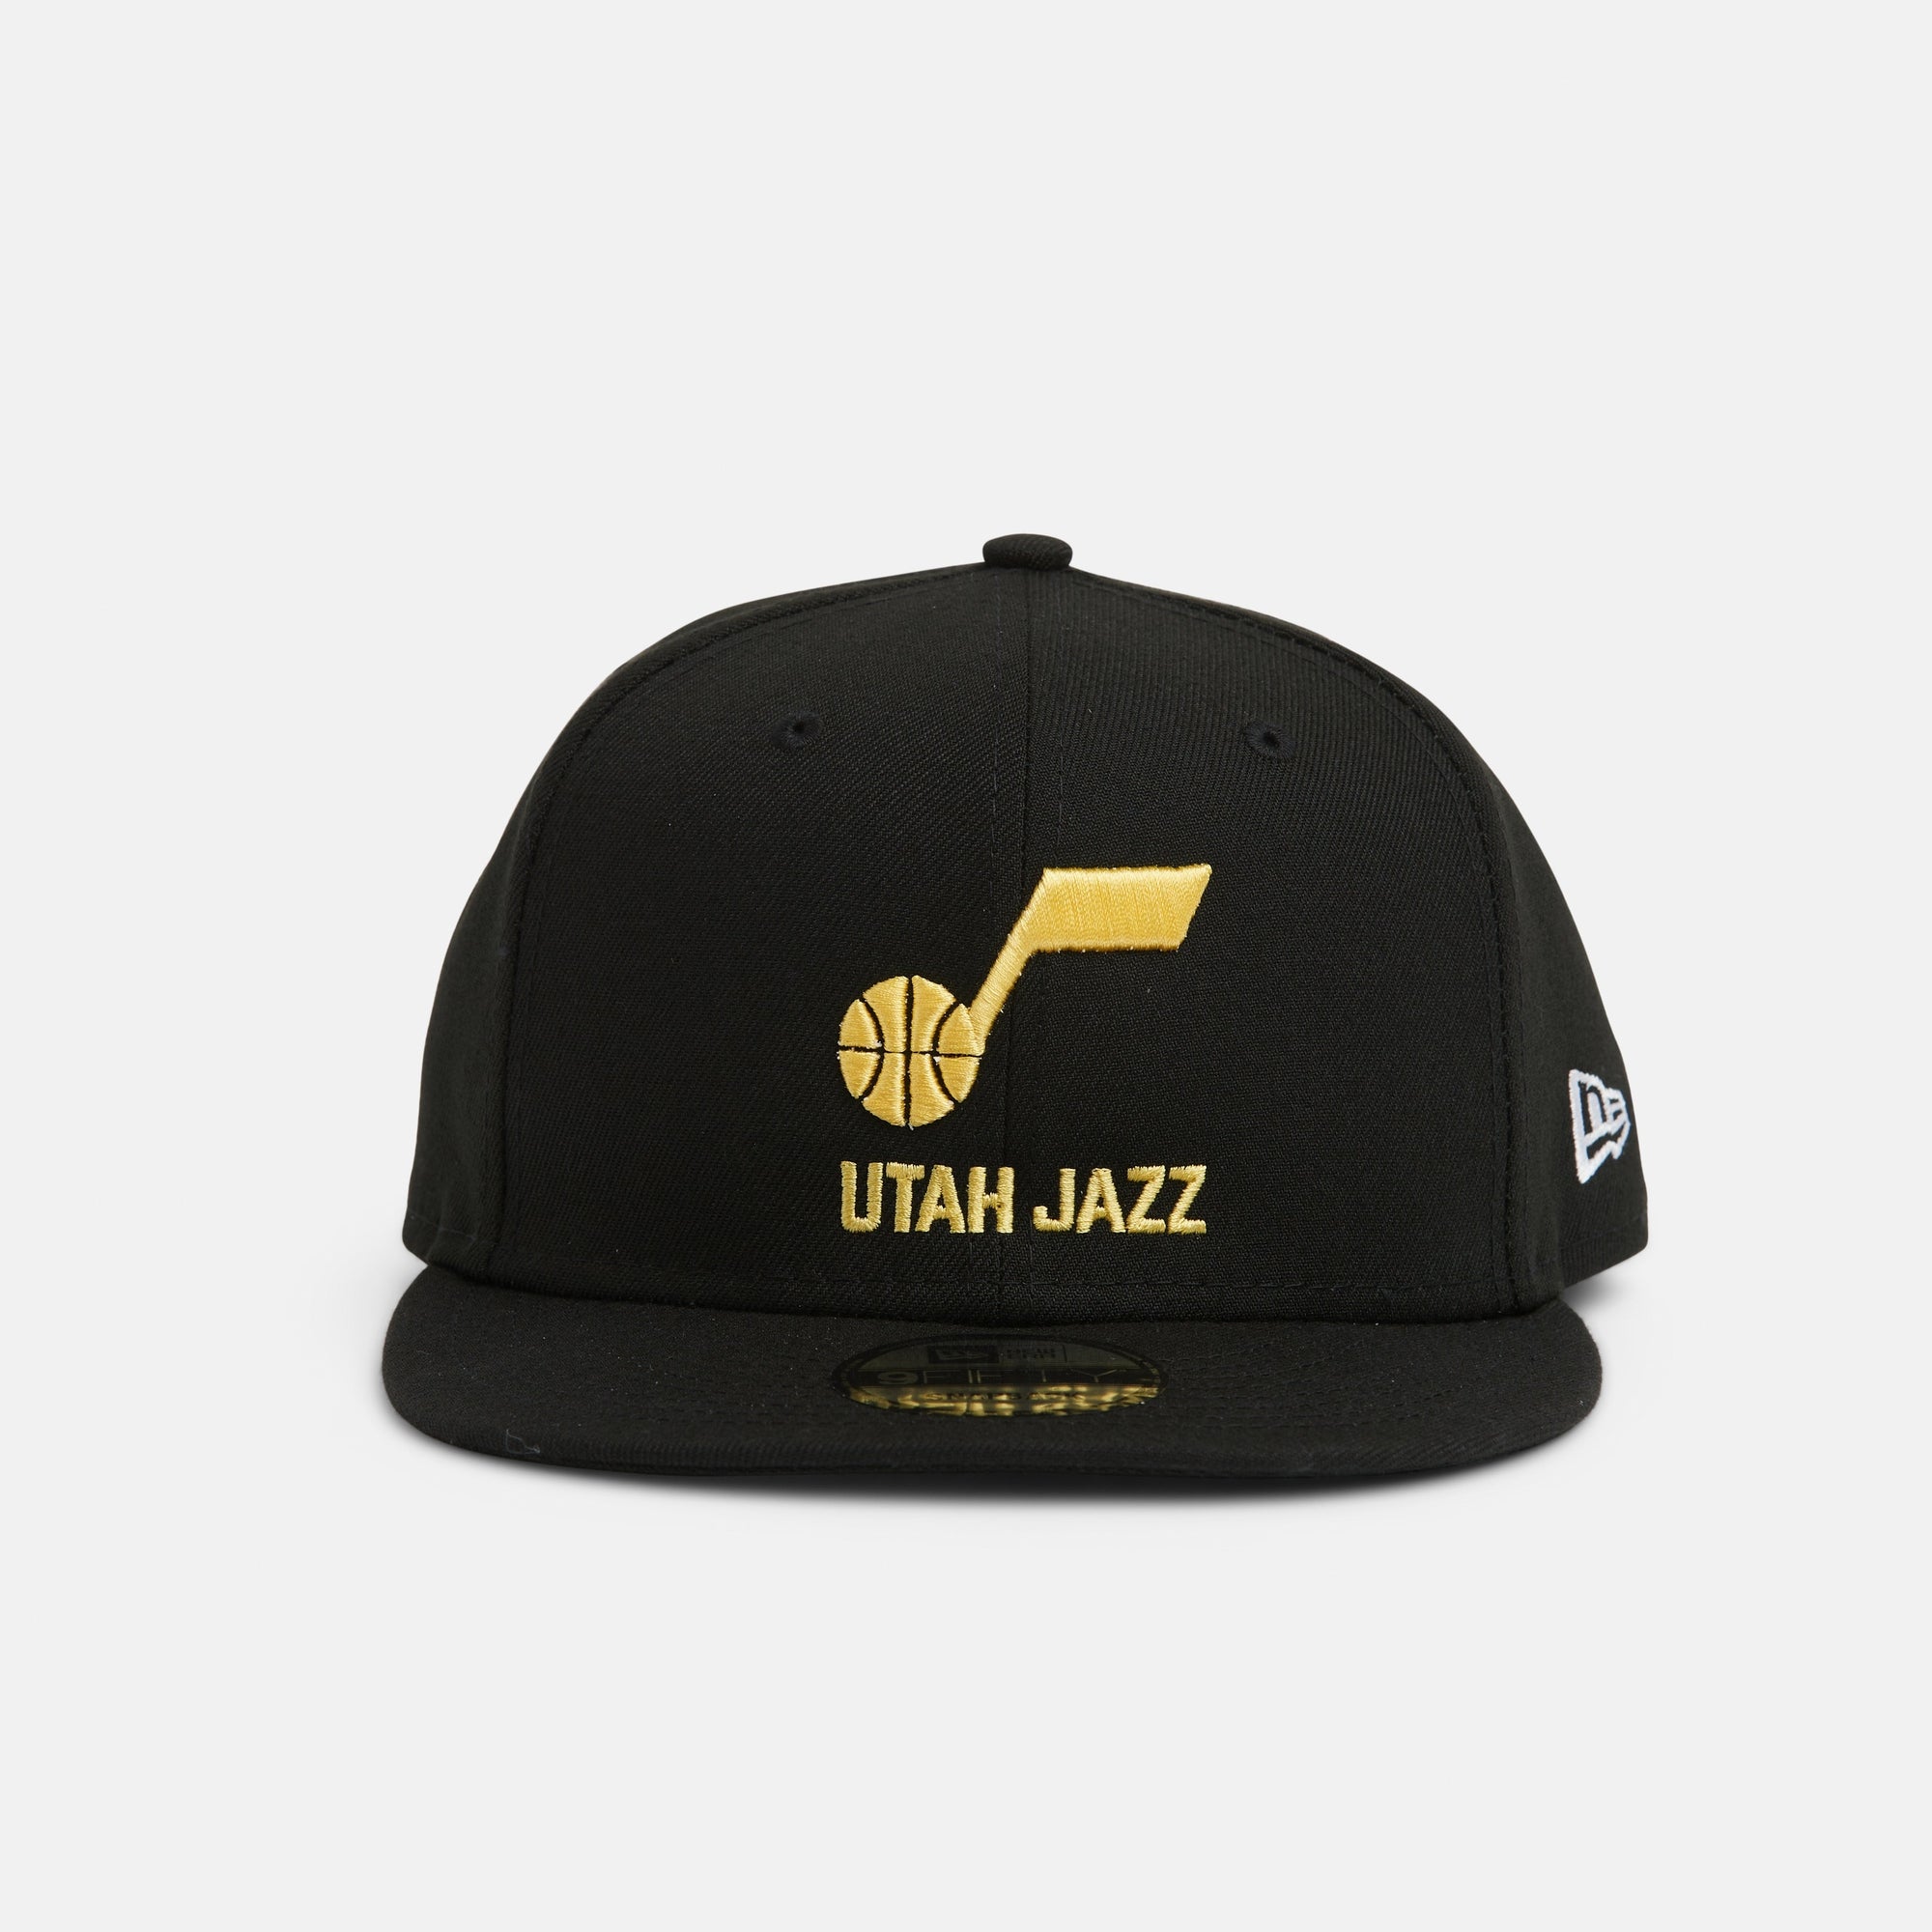 Utah Jazz New Era Team Logo T-Shirt (11546135)